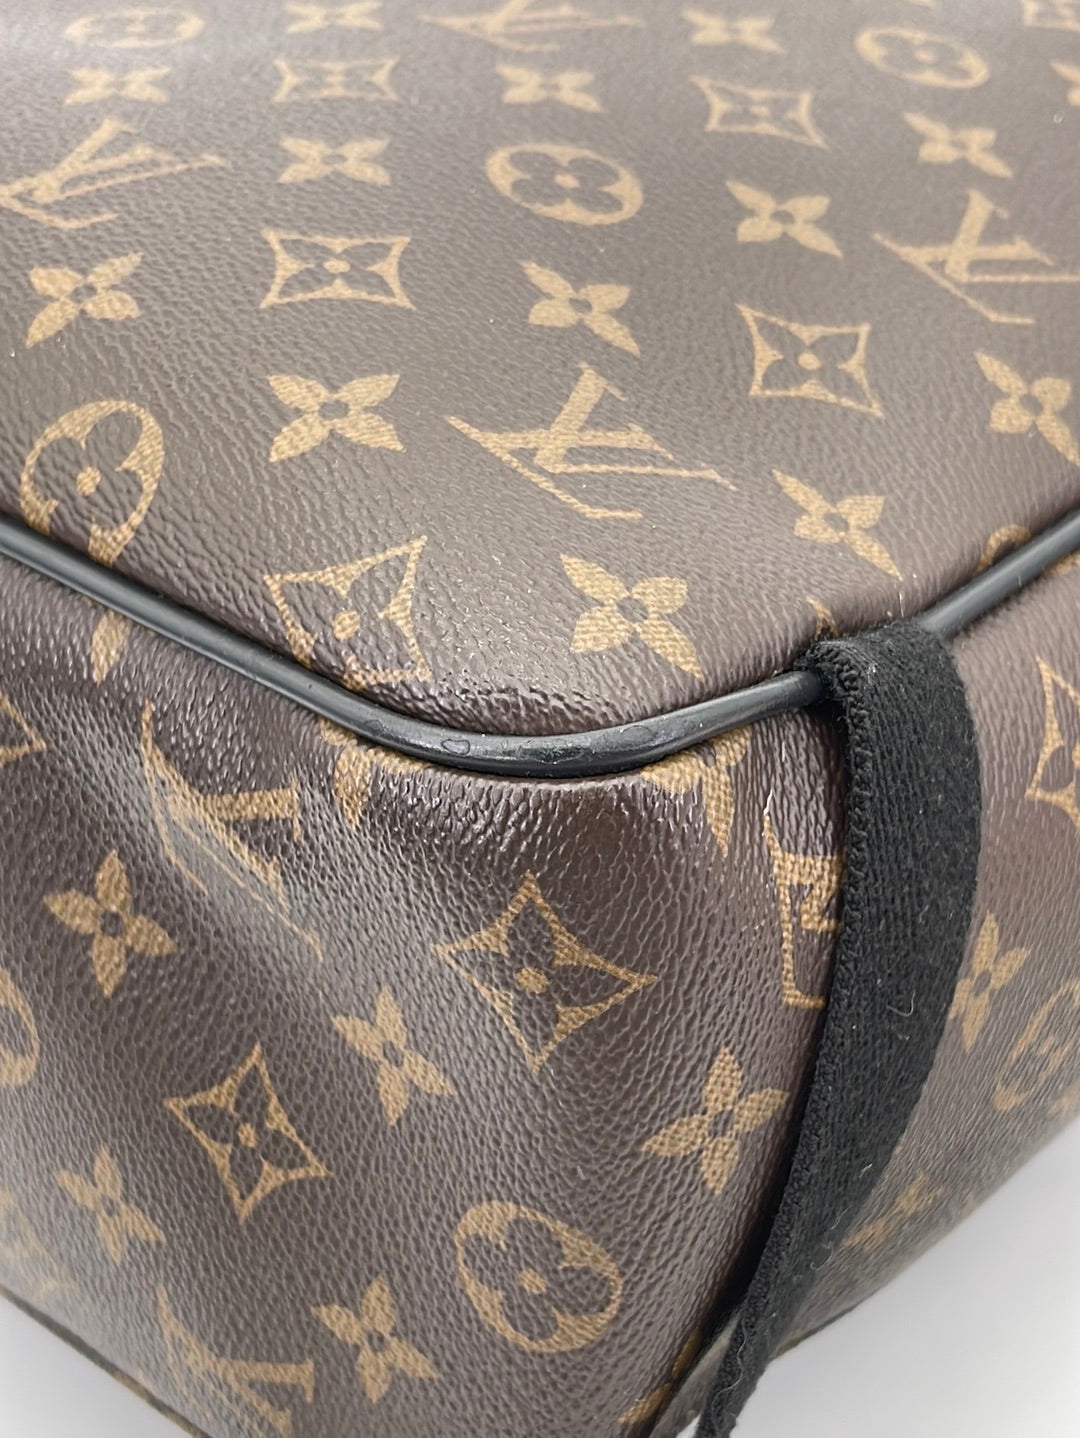 Louis Vuitton Monogram Macassar Josh Backpack Leather Nylon ref